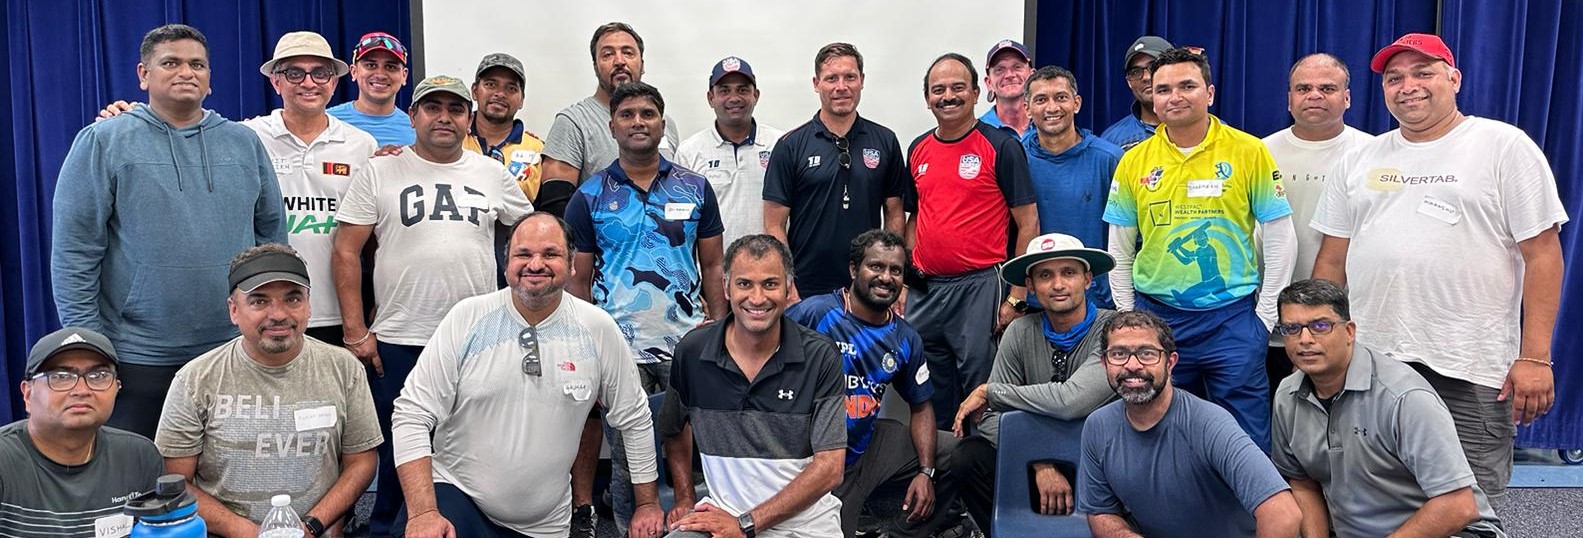 SCYCA Coordinates First ICC/USA Cricket LEVEL-1 Coaching Workshop